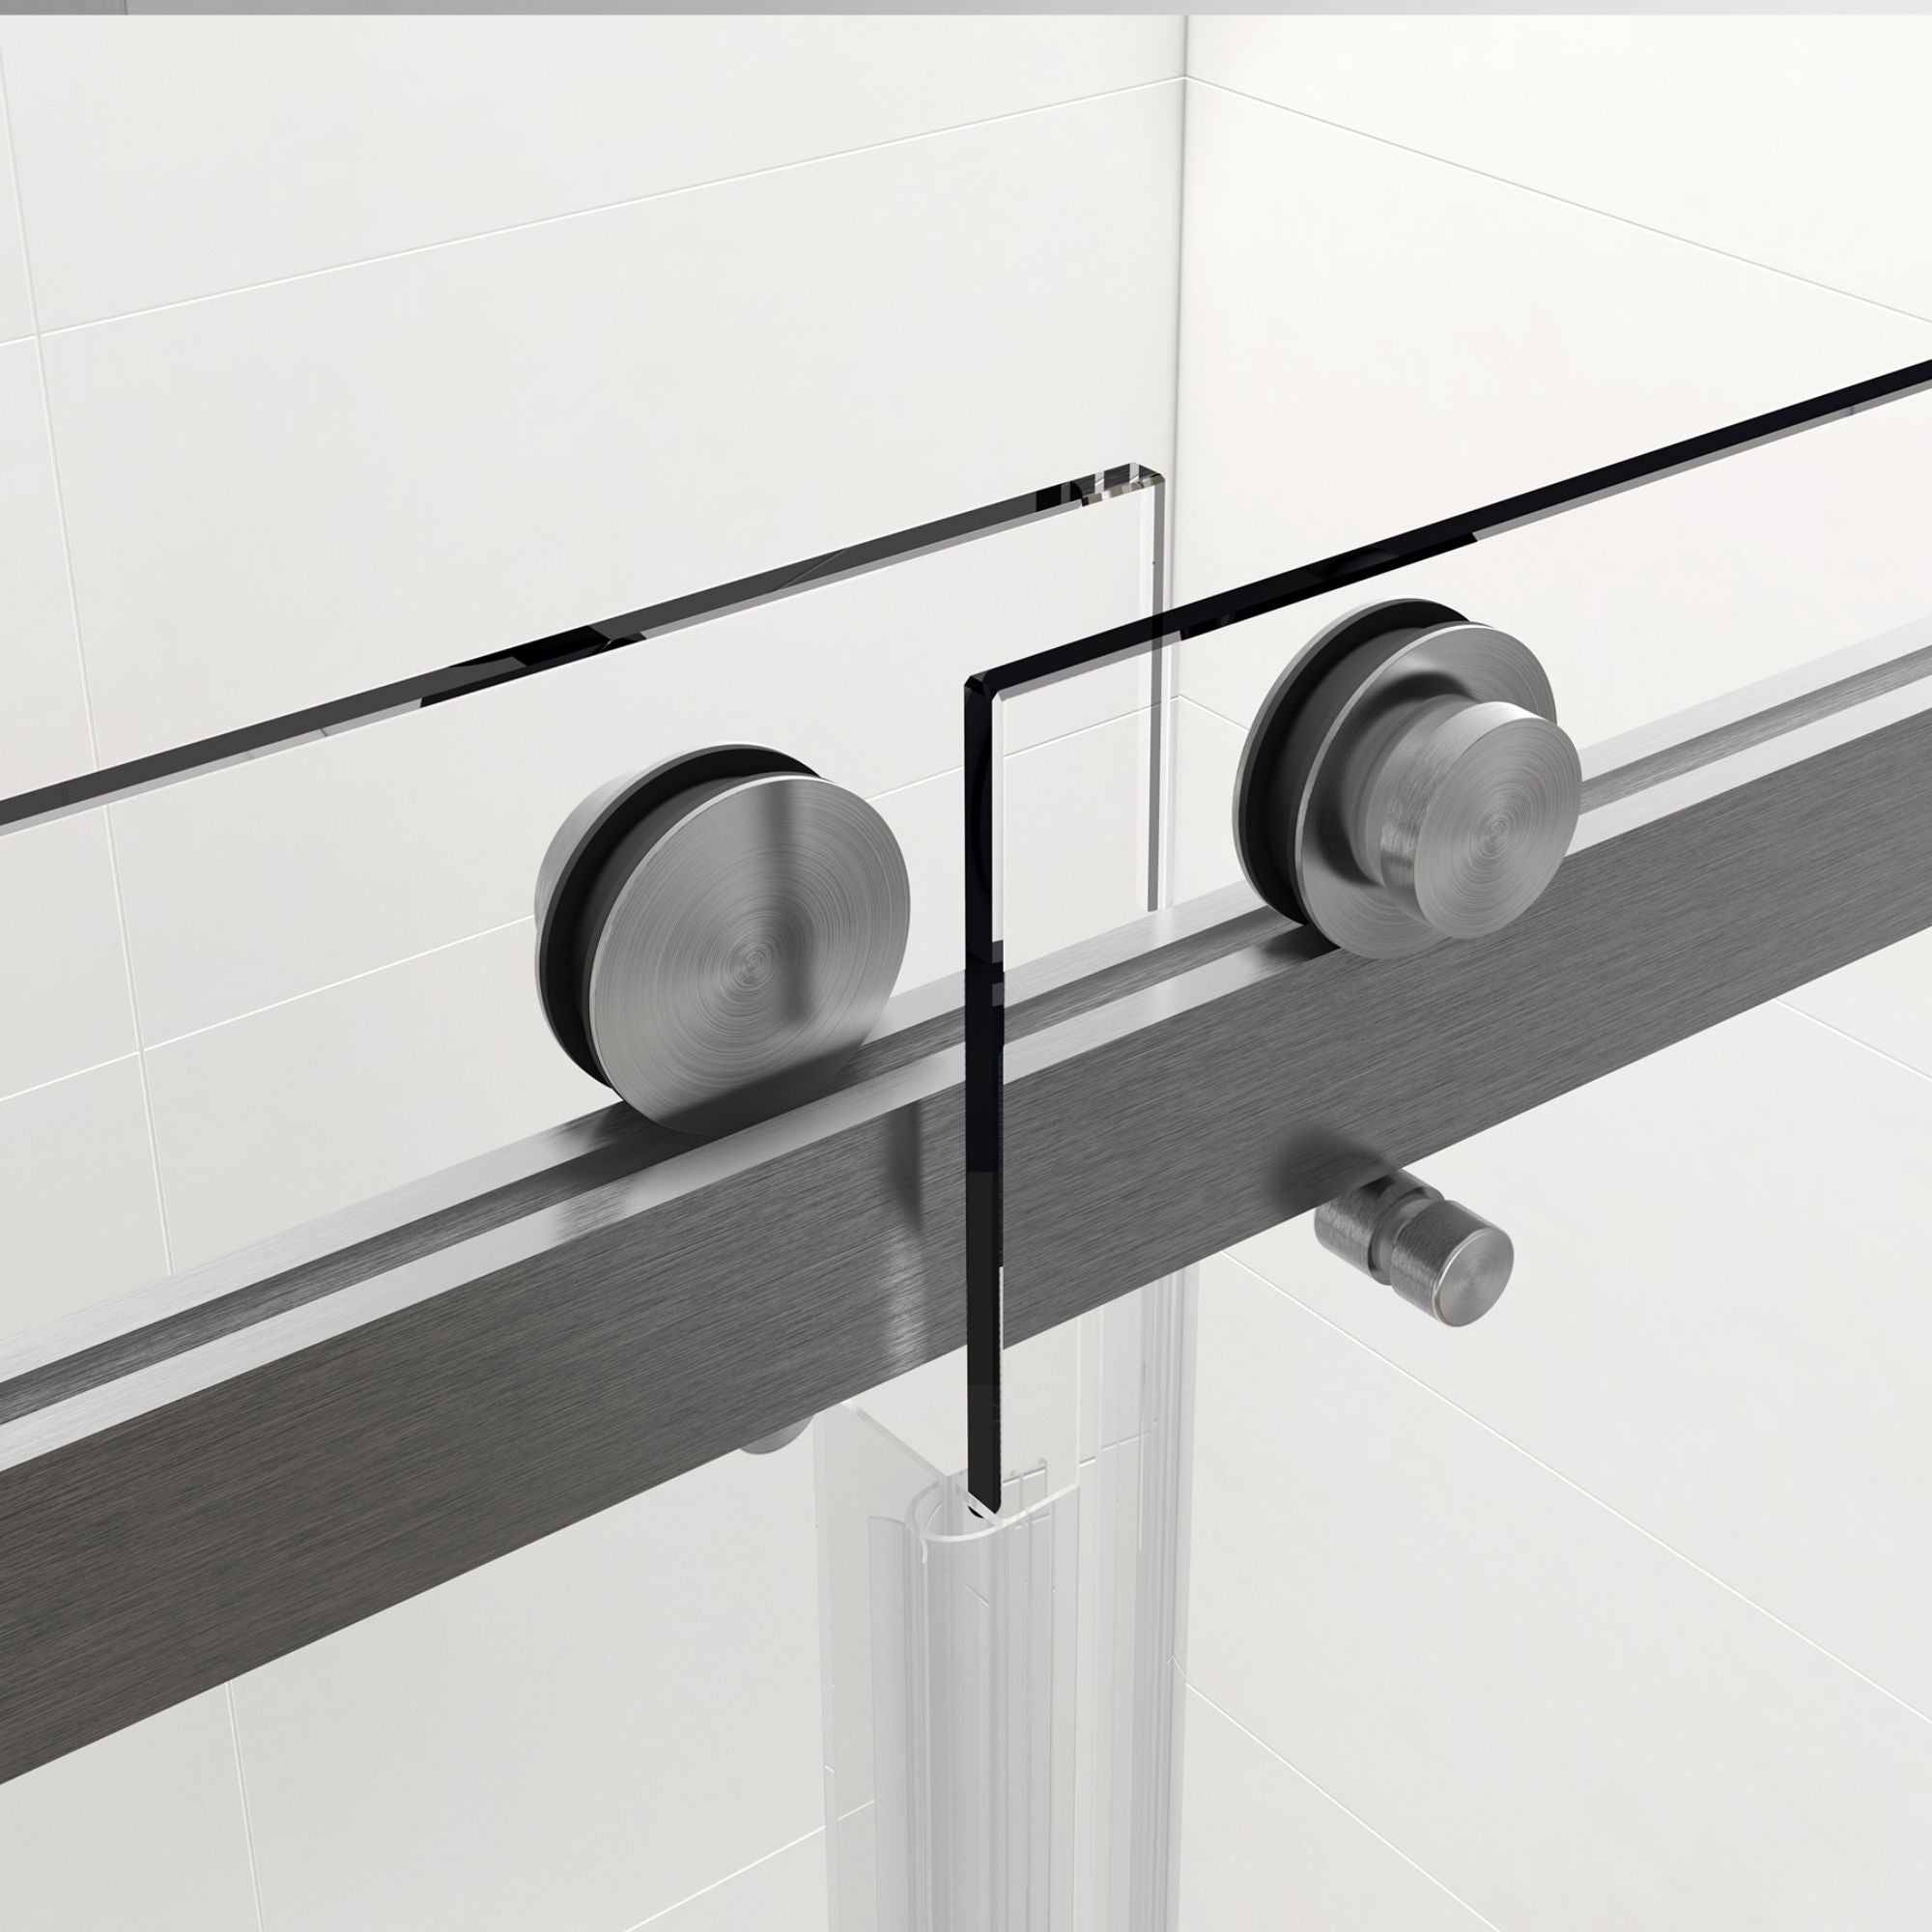 22-3/4-in W x 76-in H Frameless Sliding Soft Close Standard Shower Door (Tempered Glass)